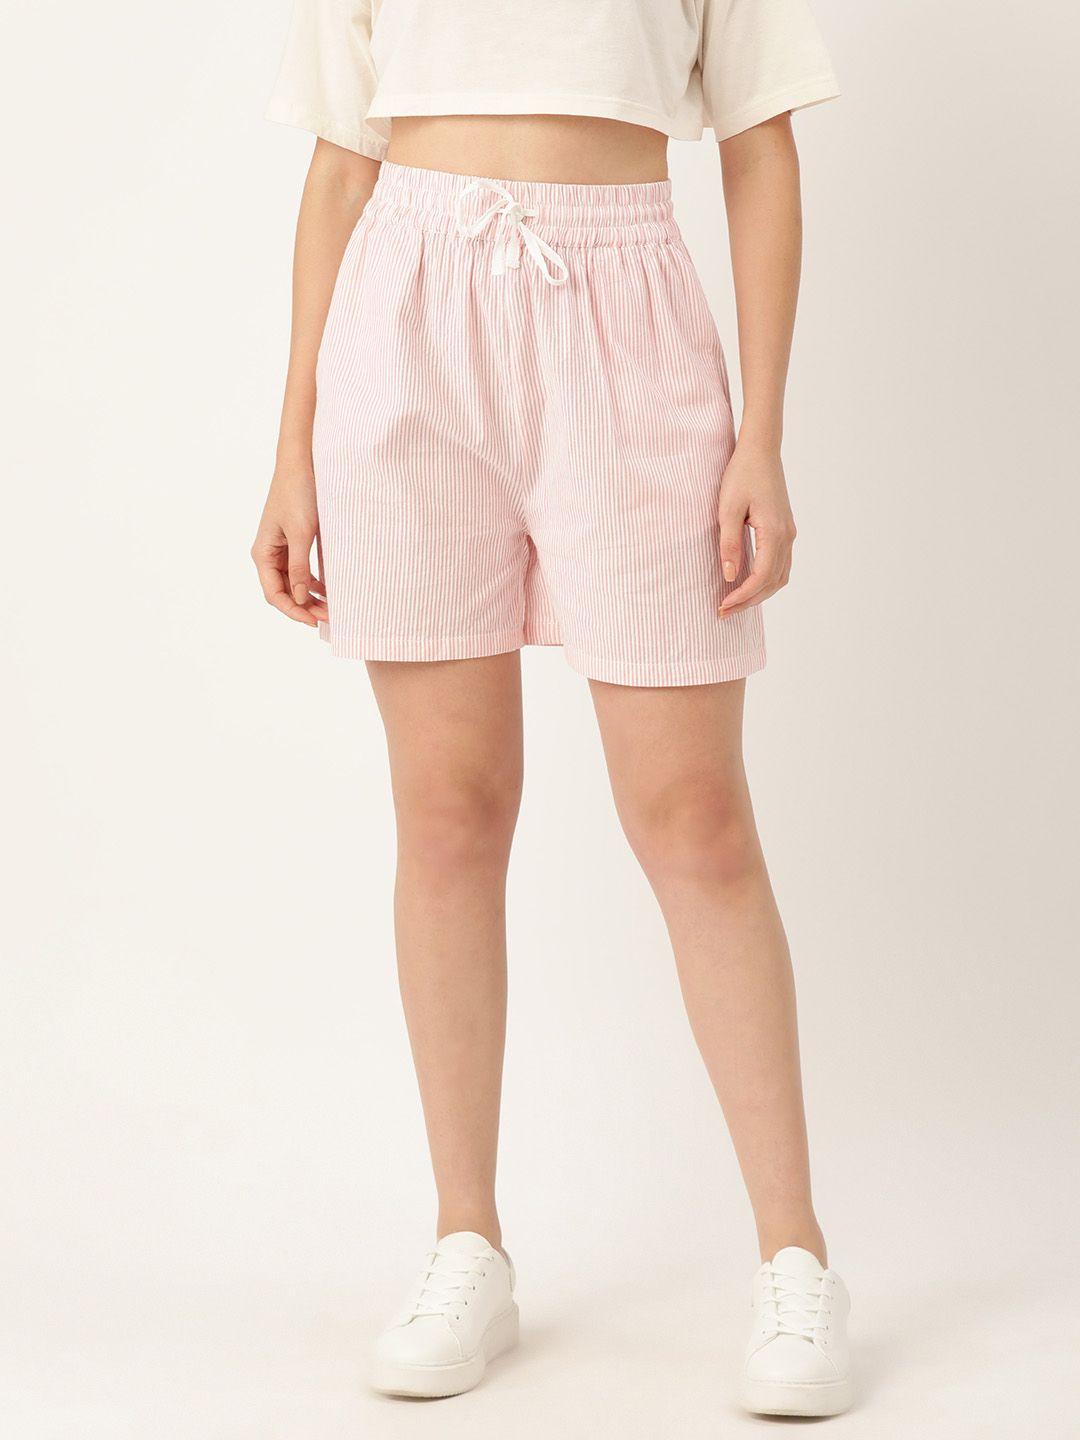 rue-collection-women-striped-regular-shorts